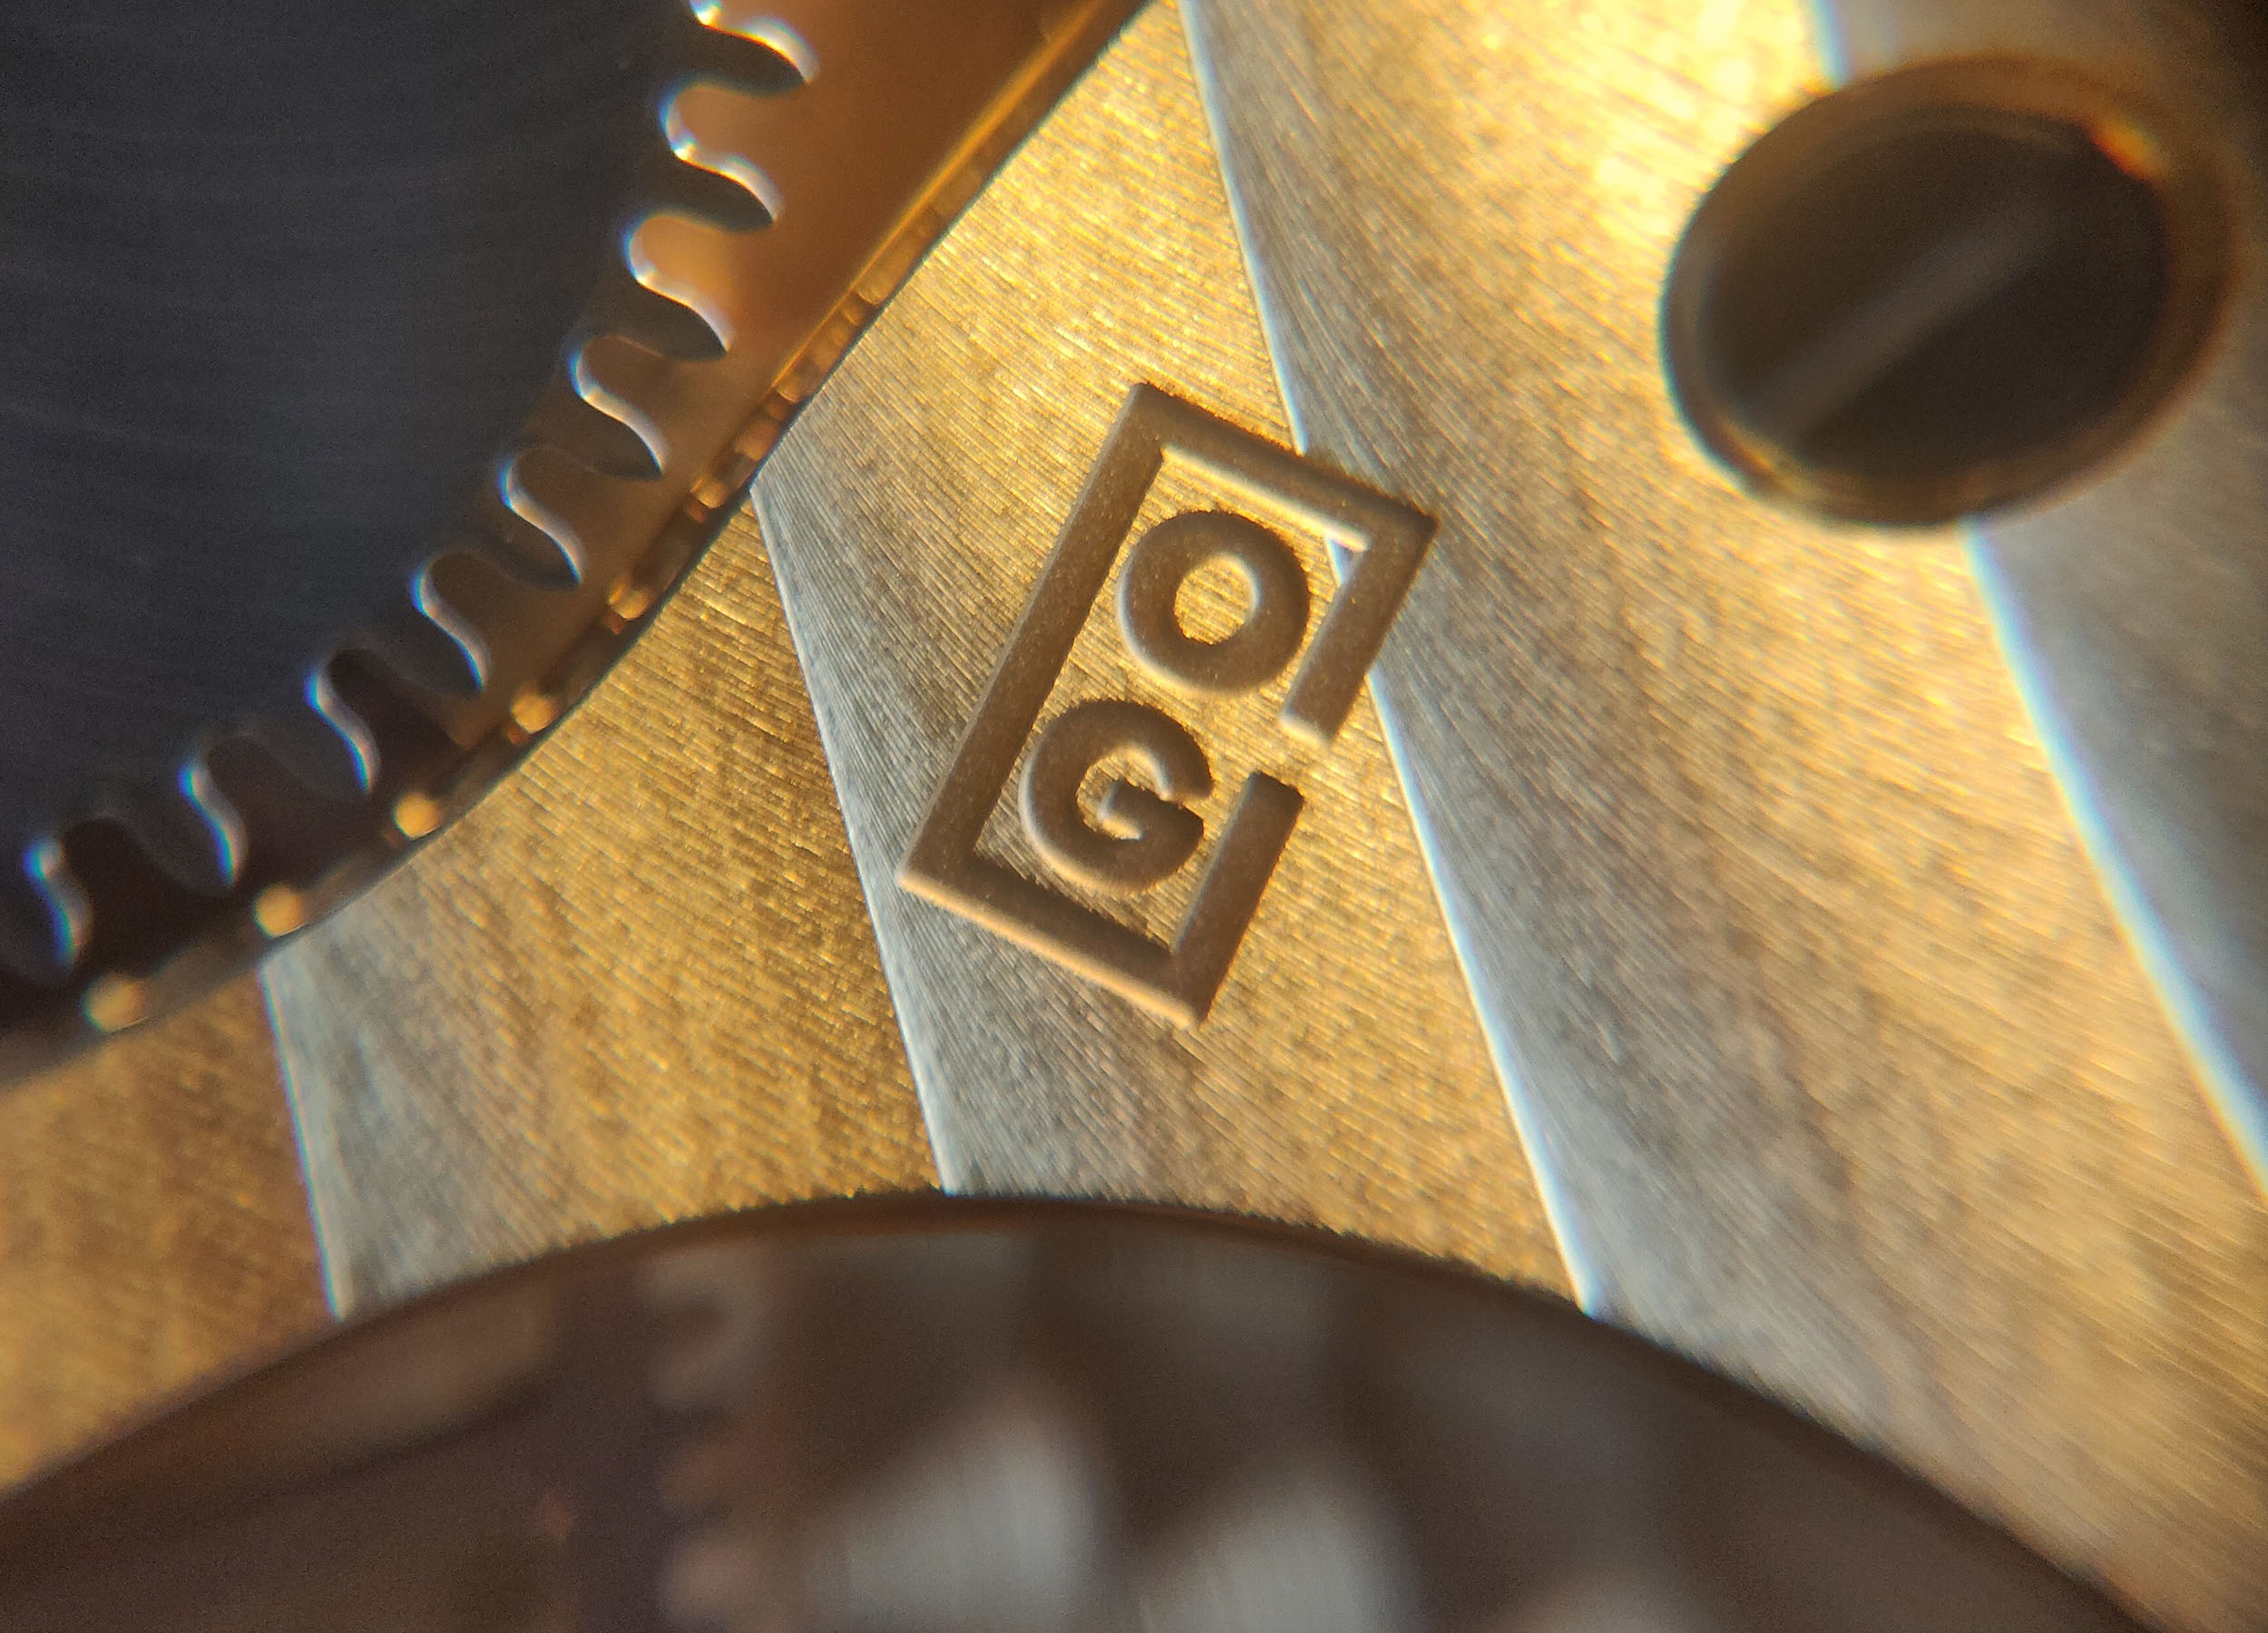 O. G engraving macro